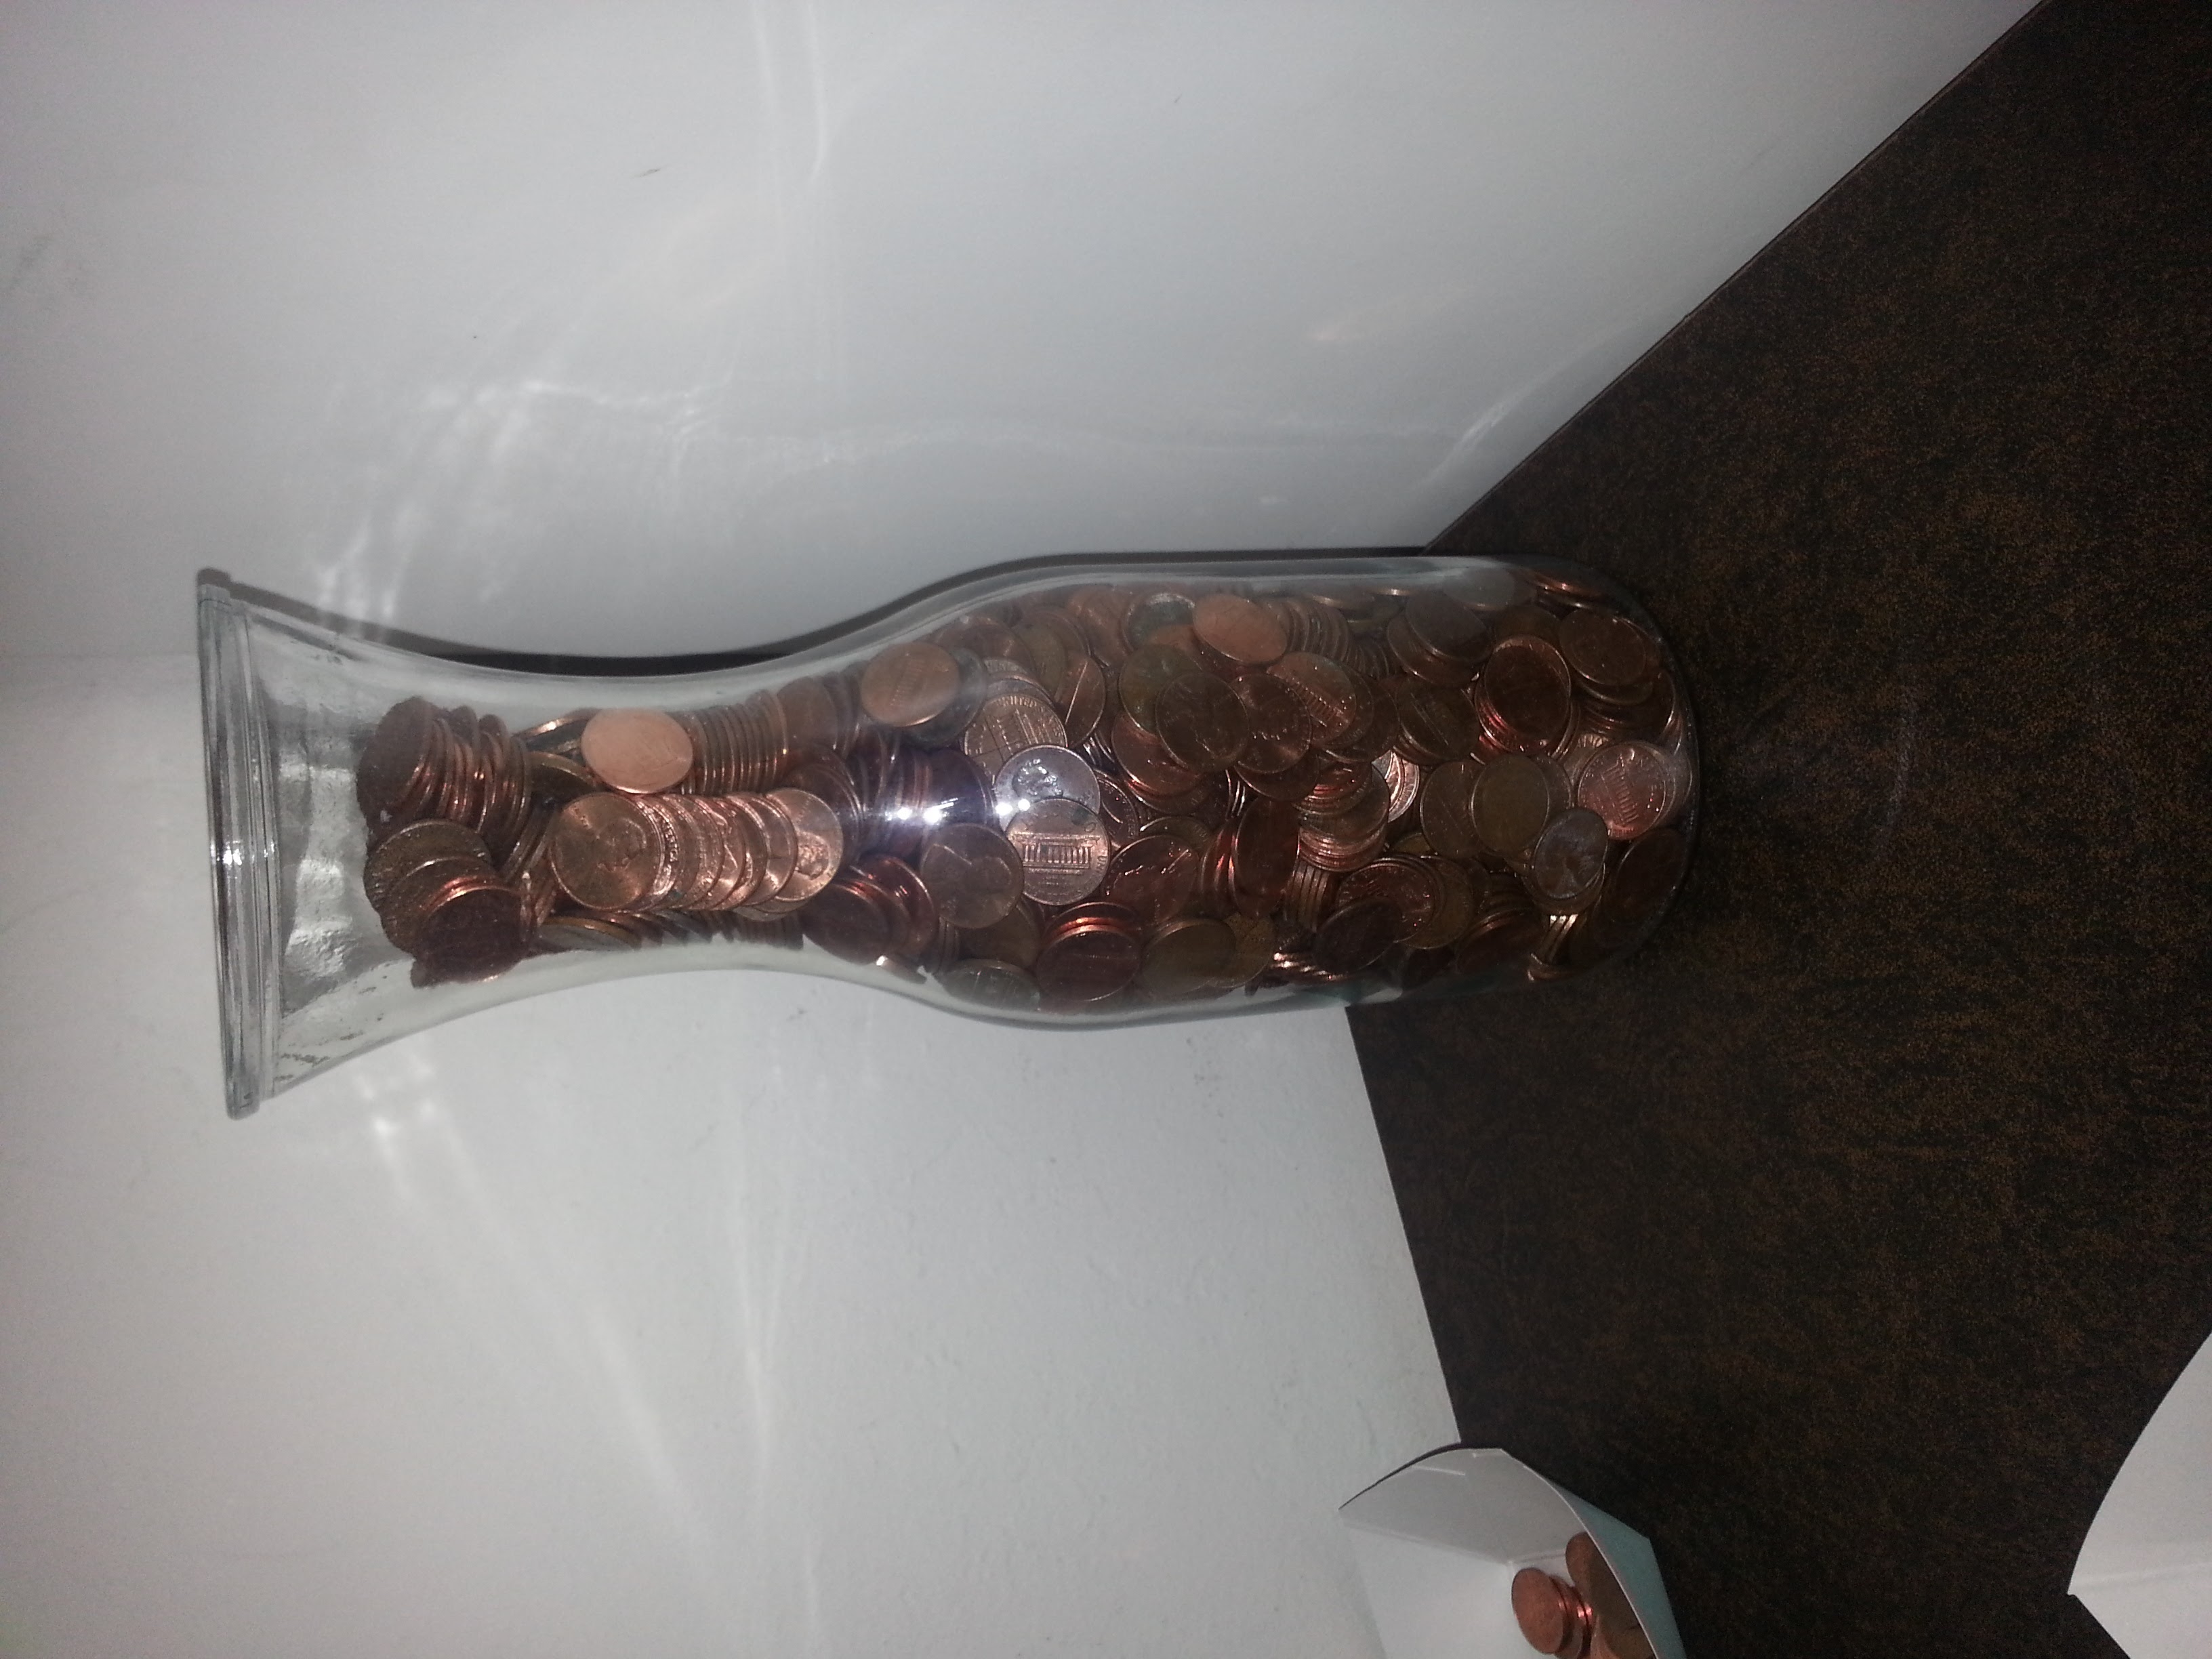 liter of pennies